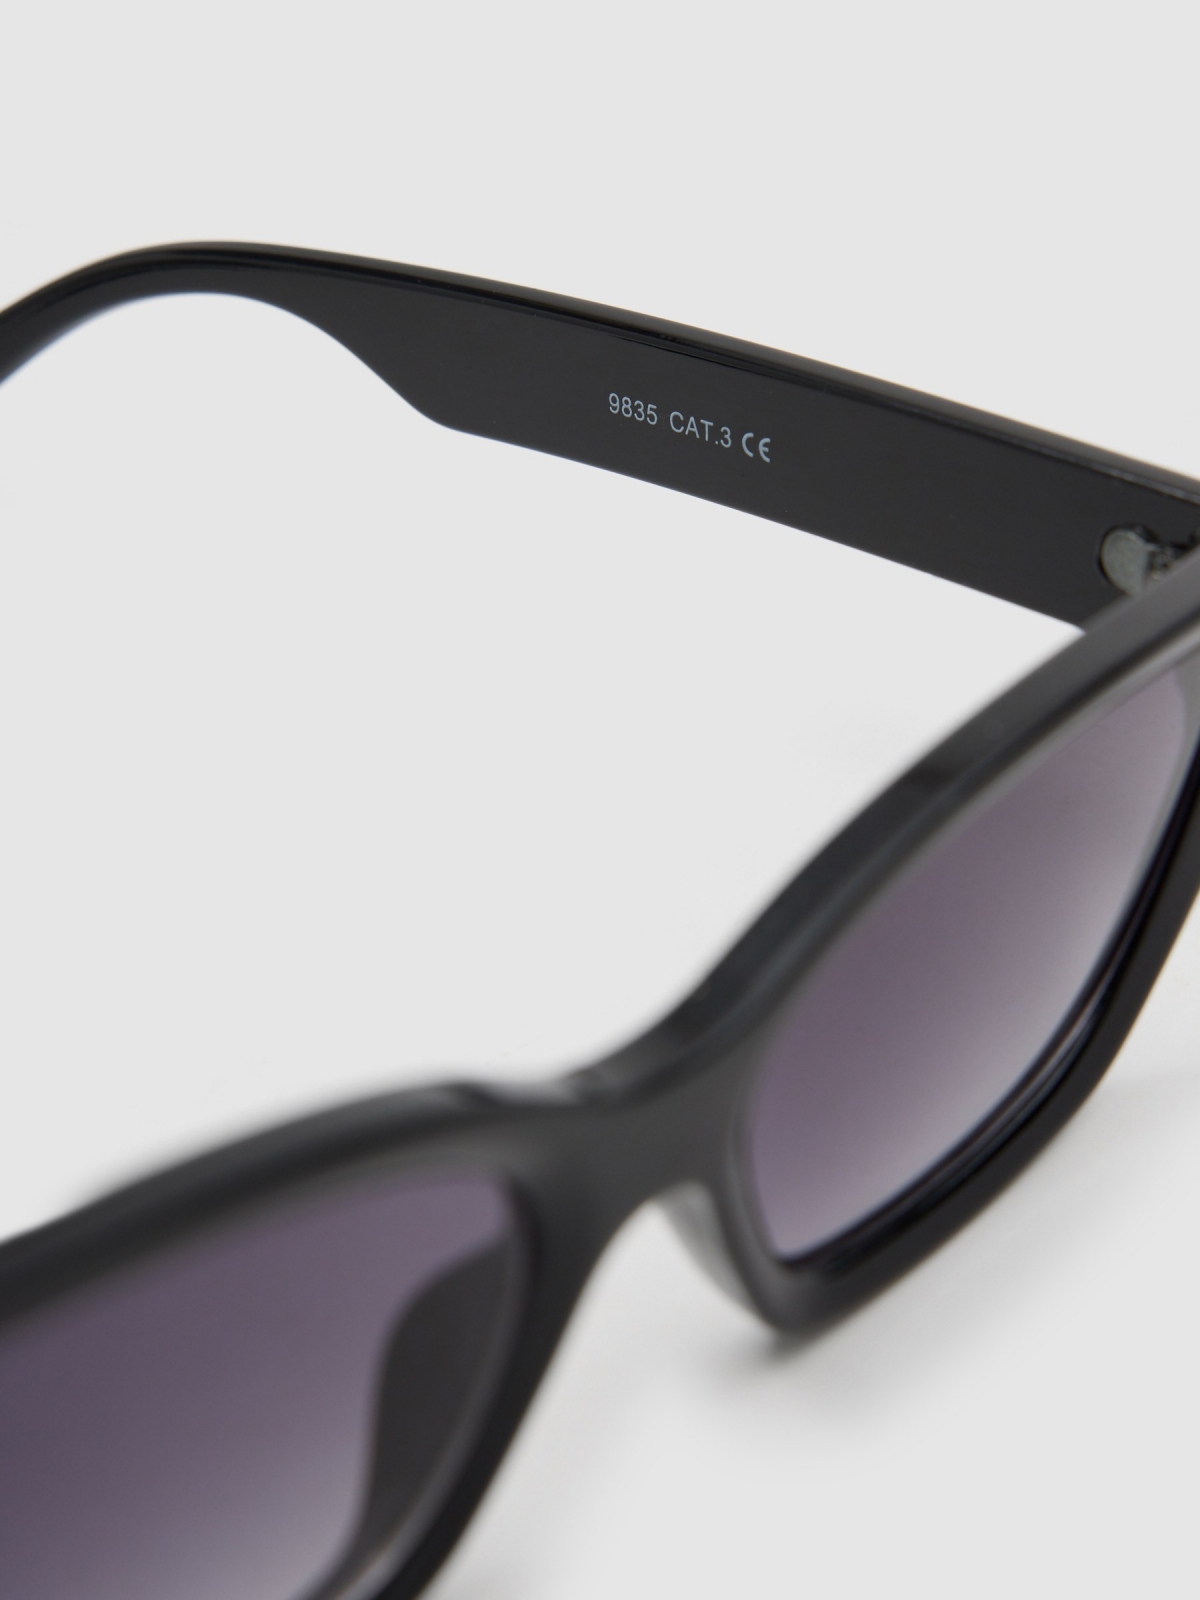 Classic sunglasses black detail view